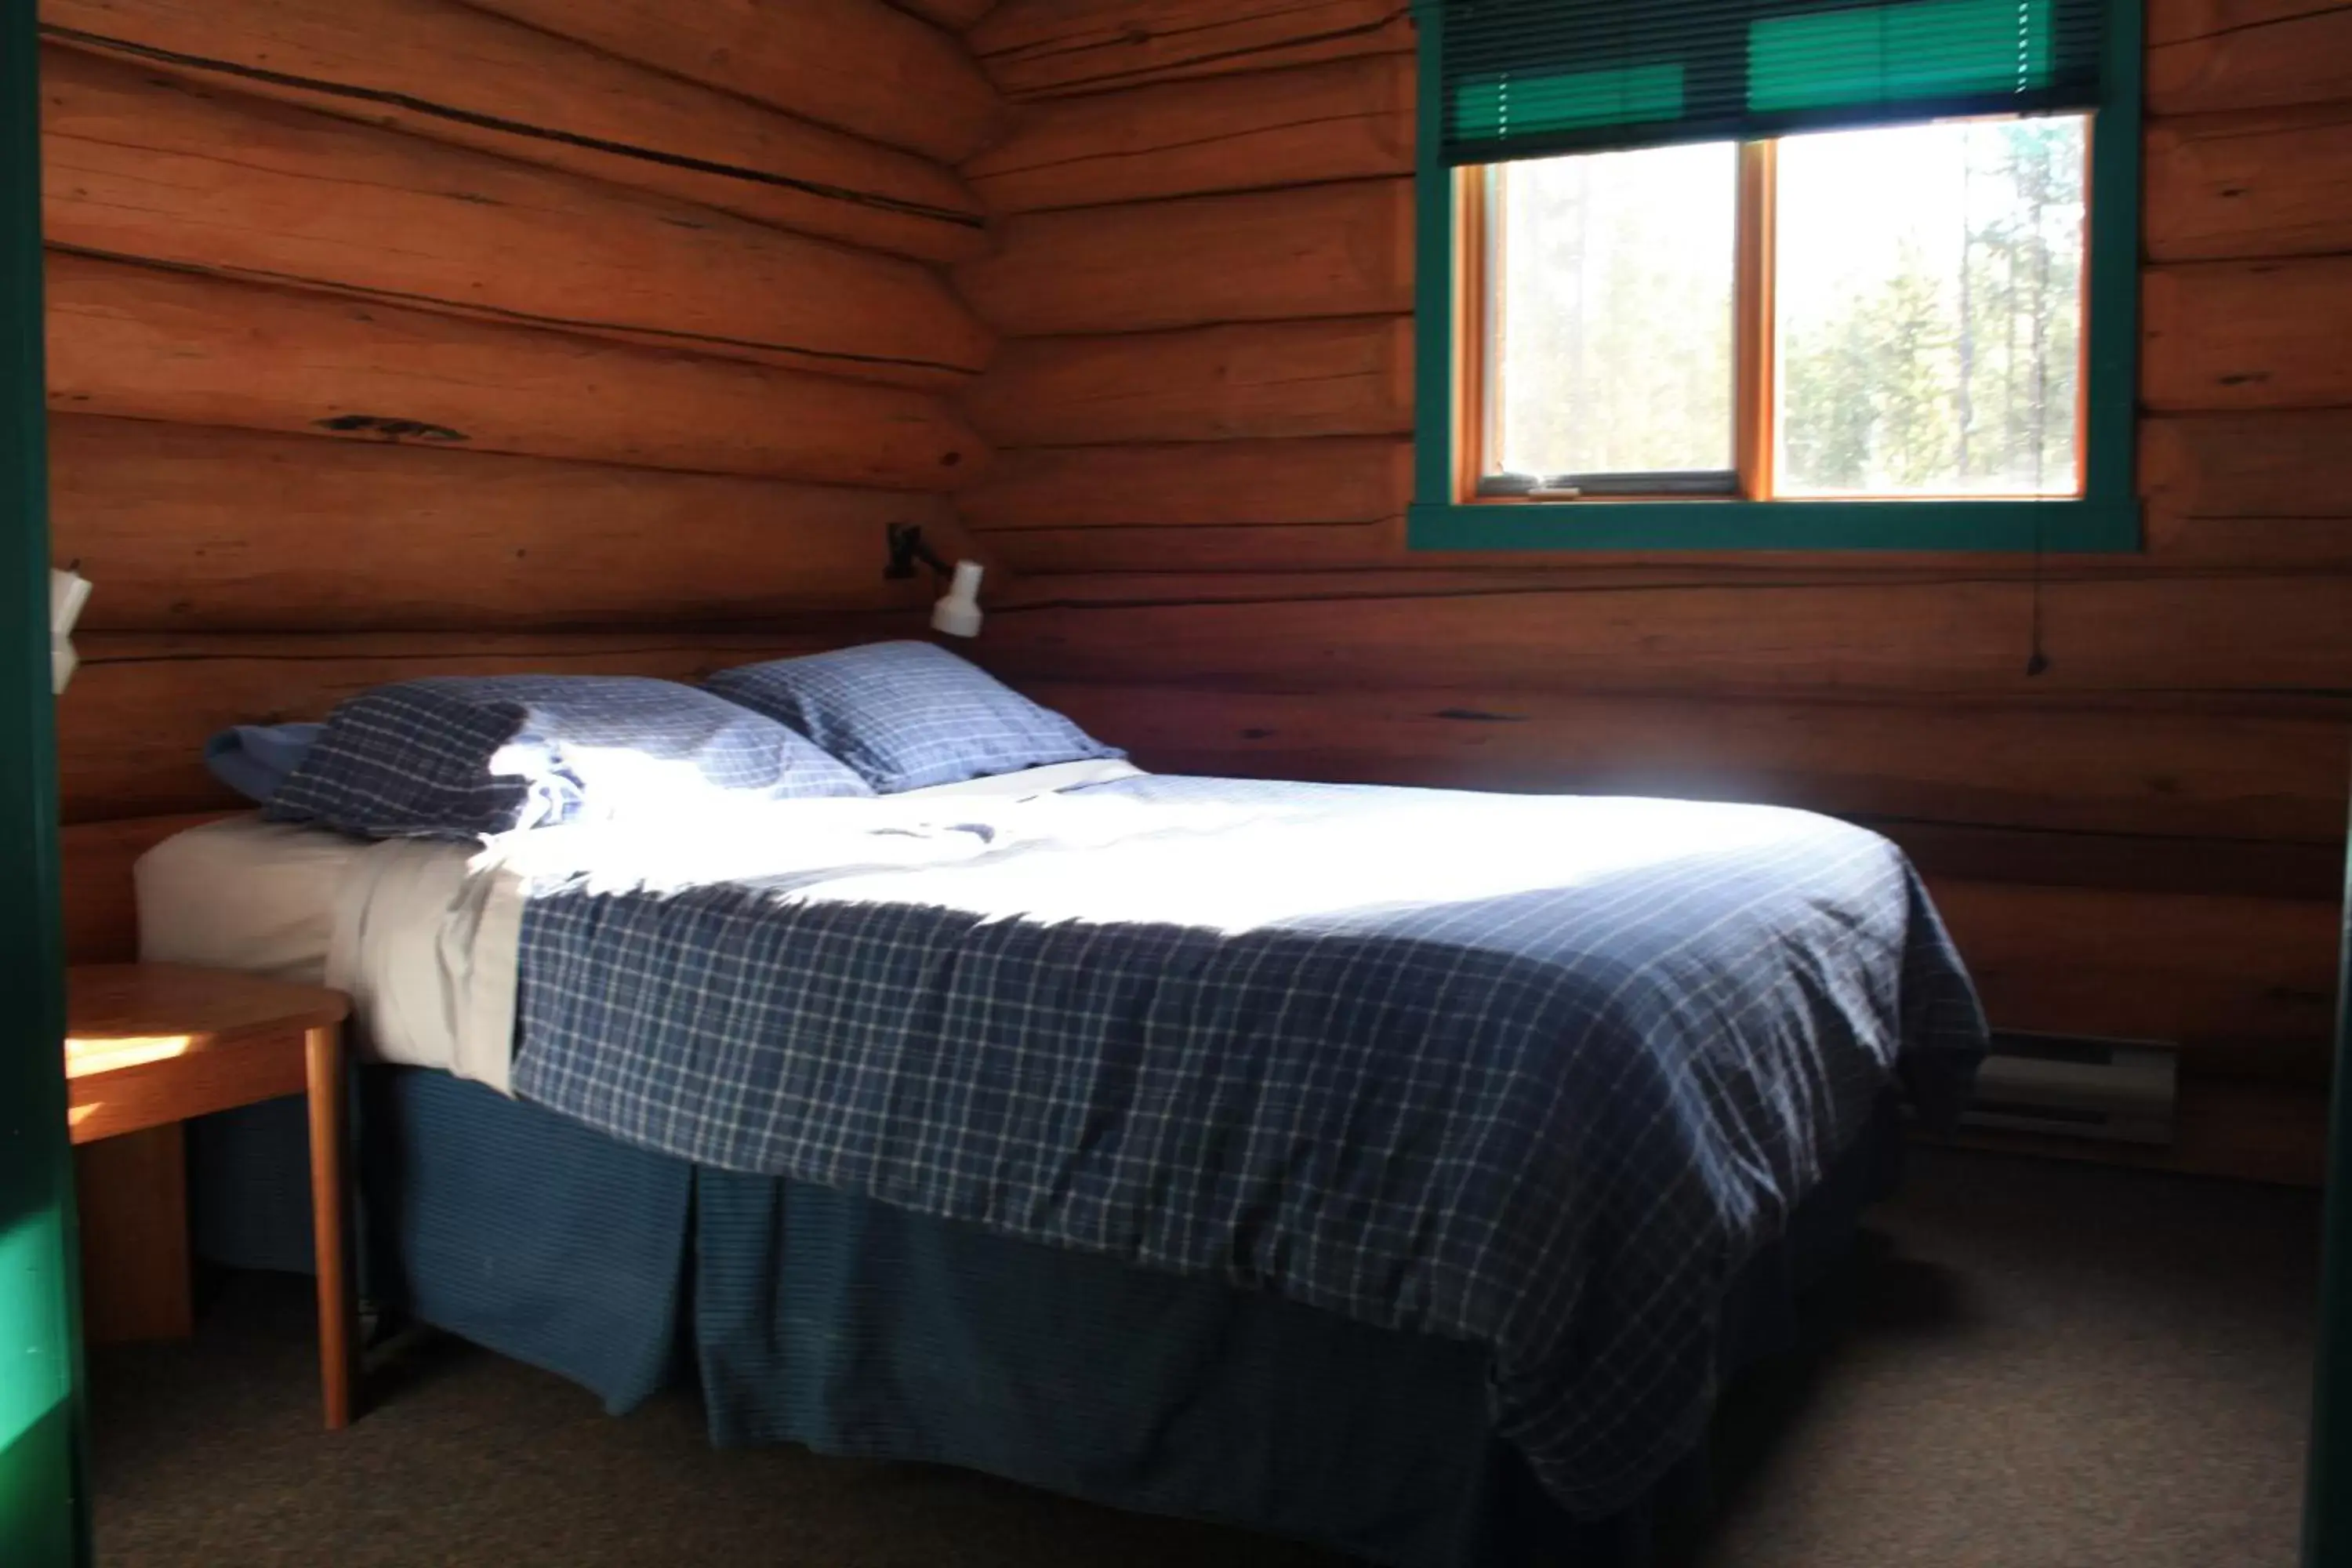 Decorative detail, Bed in Twin Peaks Resort